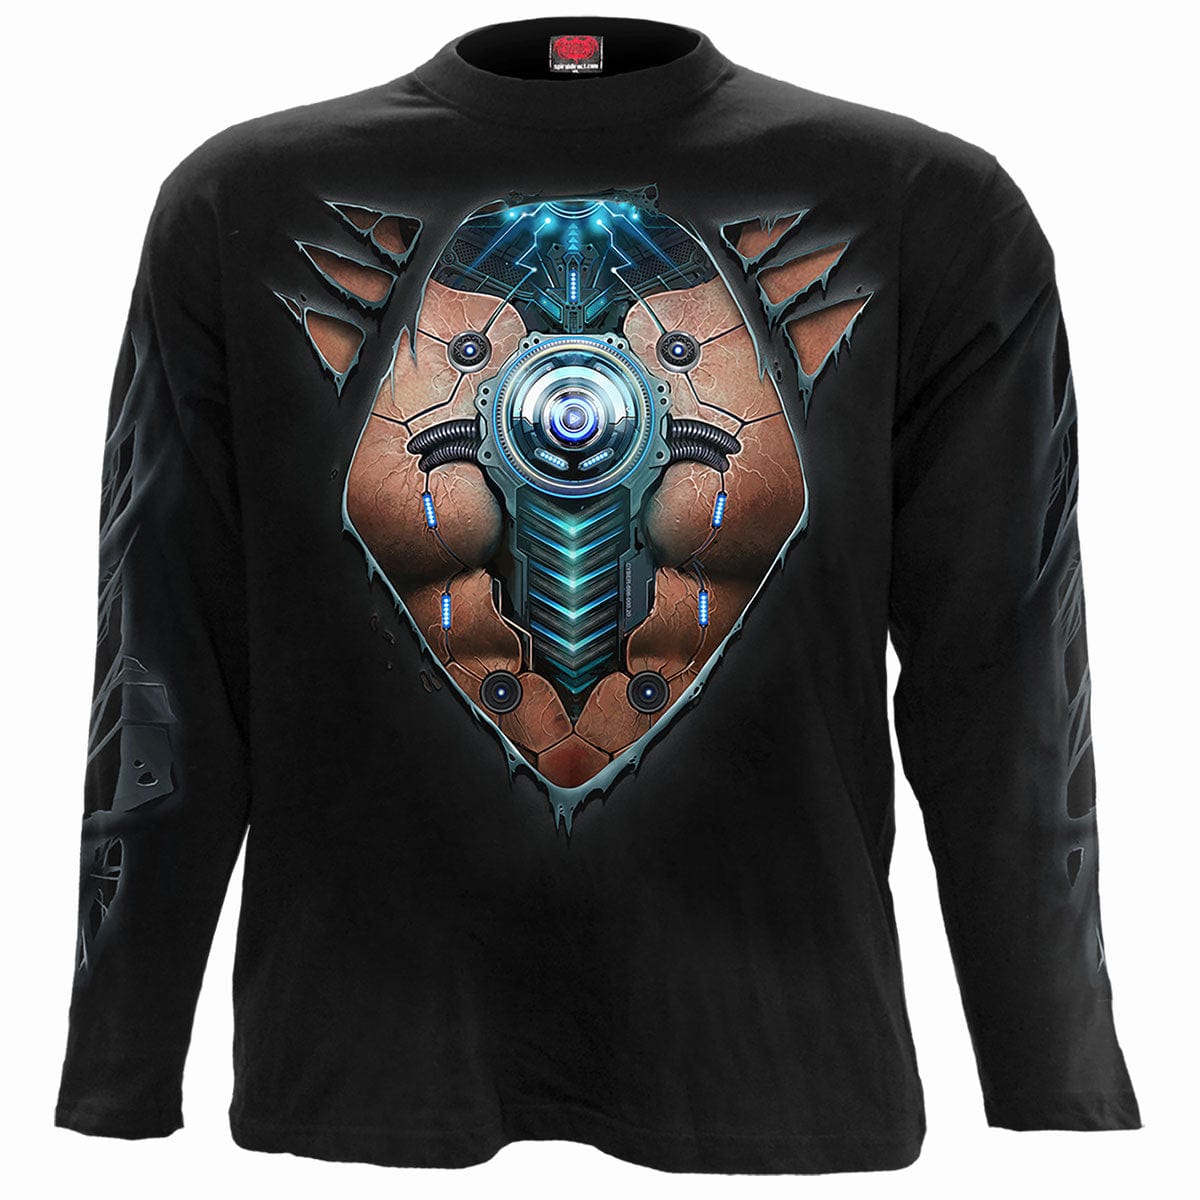 CYBER SKIN - Longsleeve T-Shirt Black - Spiral USA